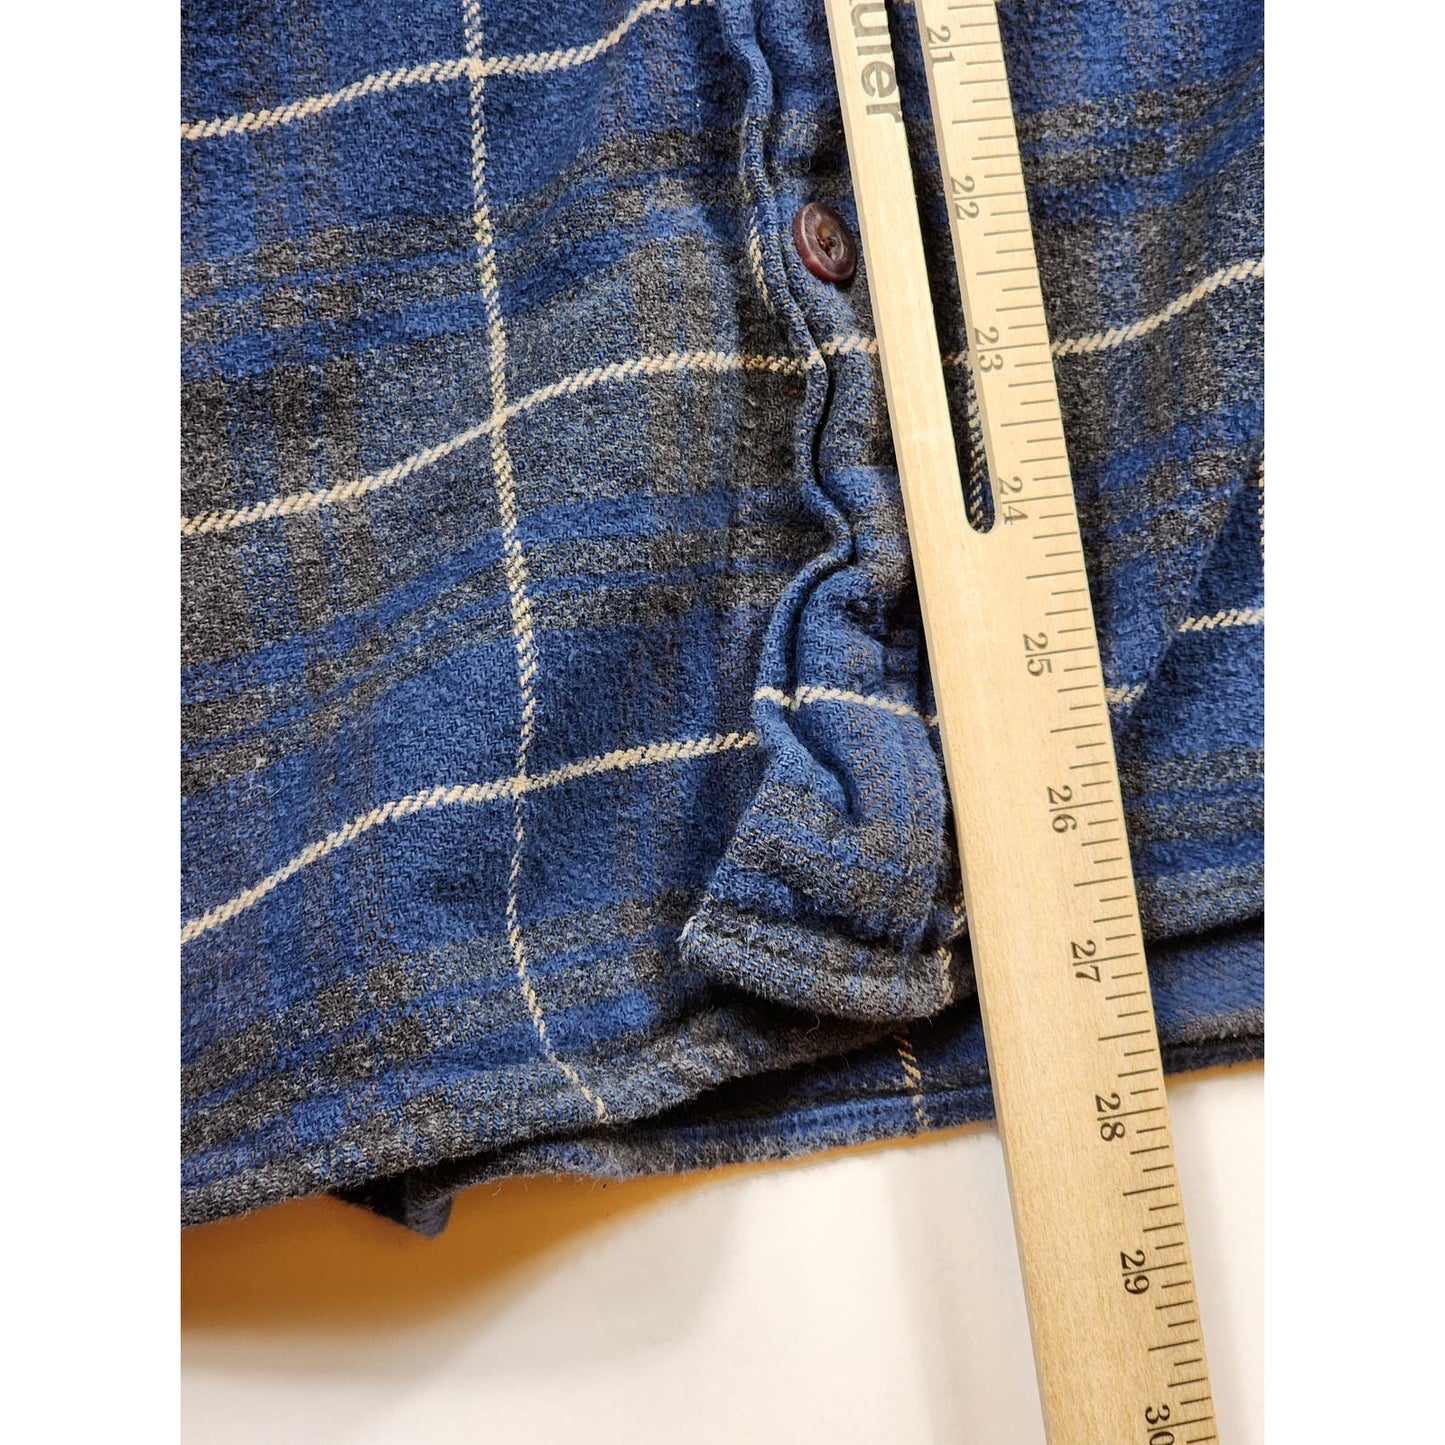 Burry Lane Flannel Shirt Mens Medium Classic Rugged Plaid Long Sleeve Button Up